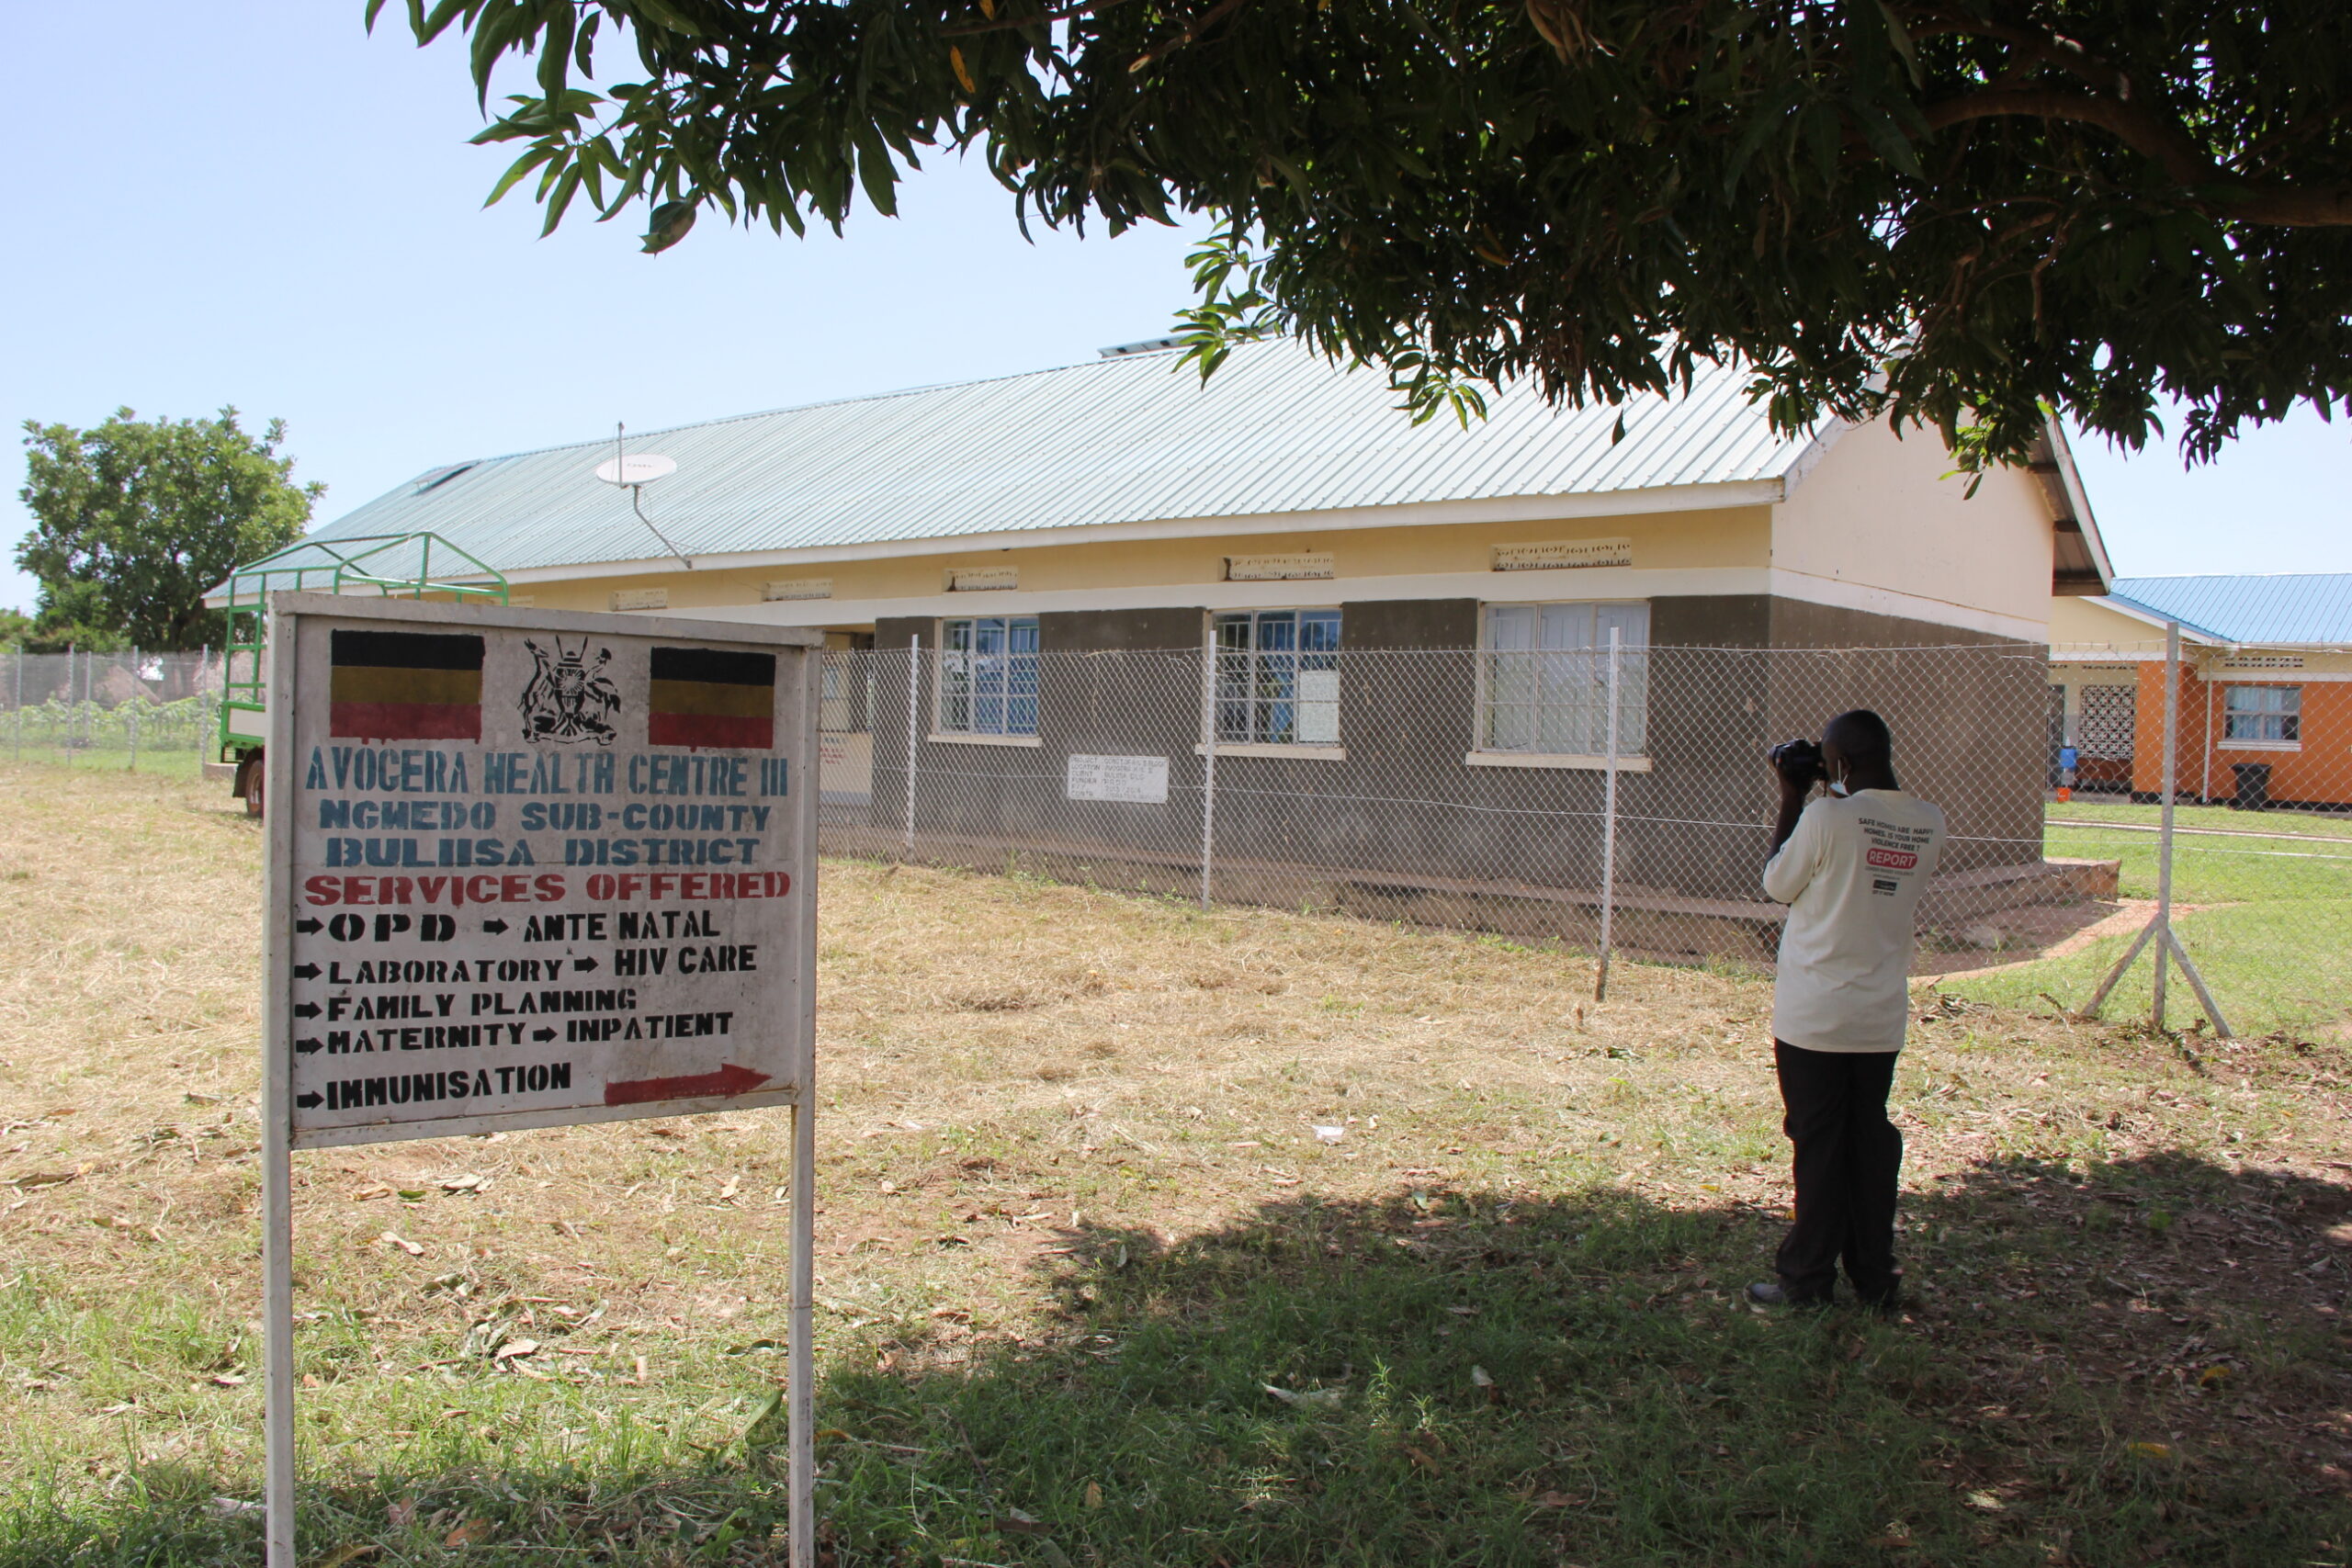 Avogera Health Centre III in Ngwedo Sub-County in Buliisa district. Photo by Robert Atuhairwe.